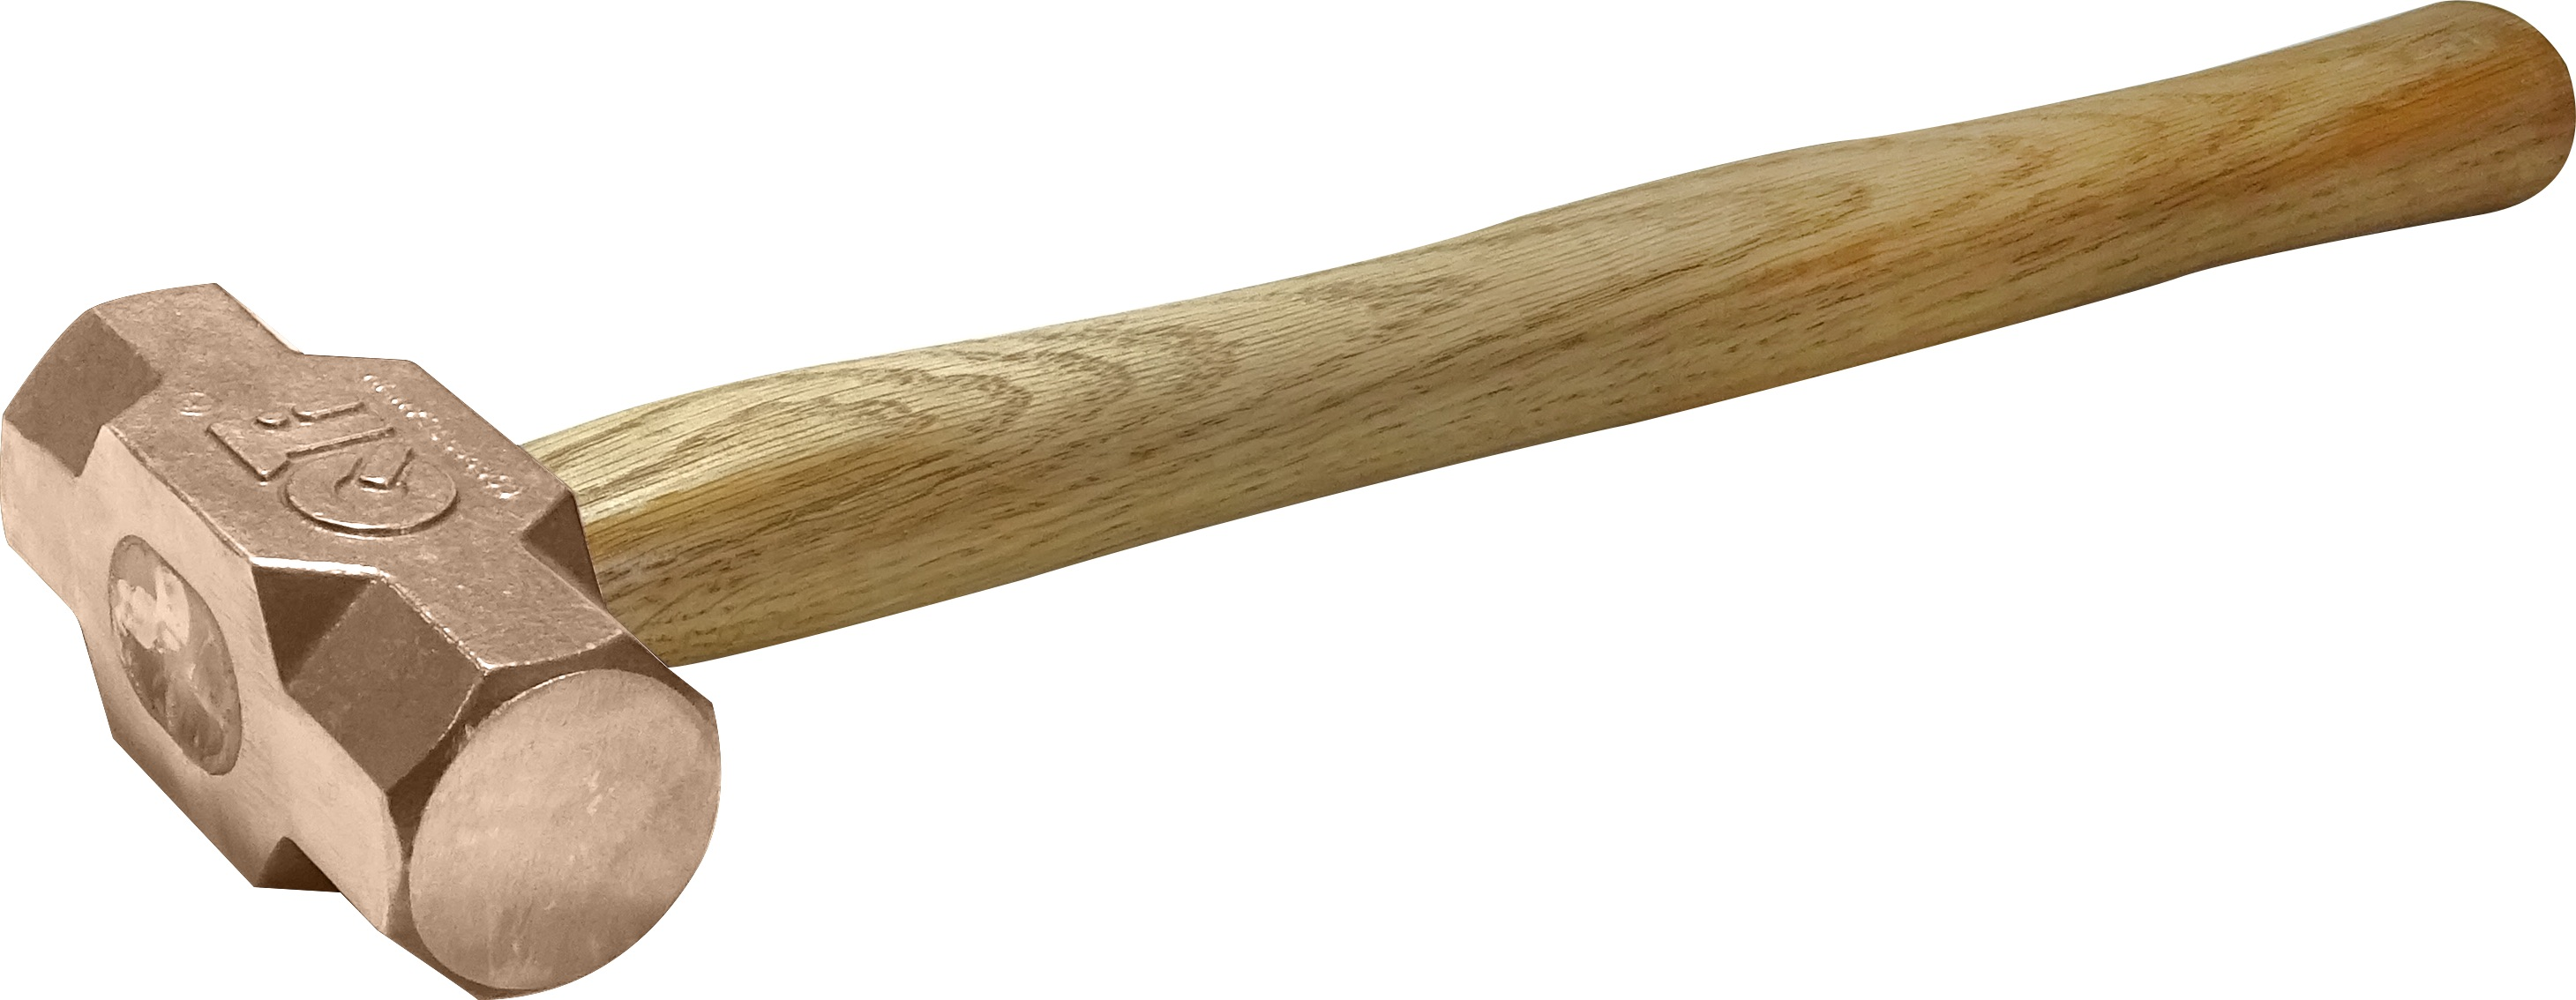 QTi® Sledge Hammer - 500 Gms / 1 lbs (Wooden Handle)